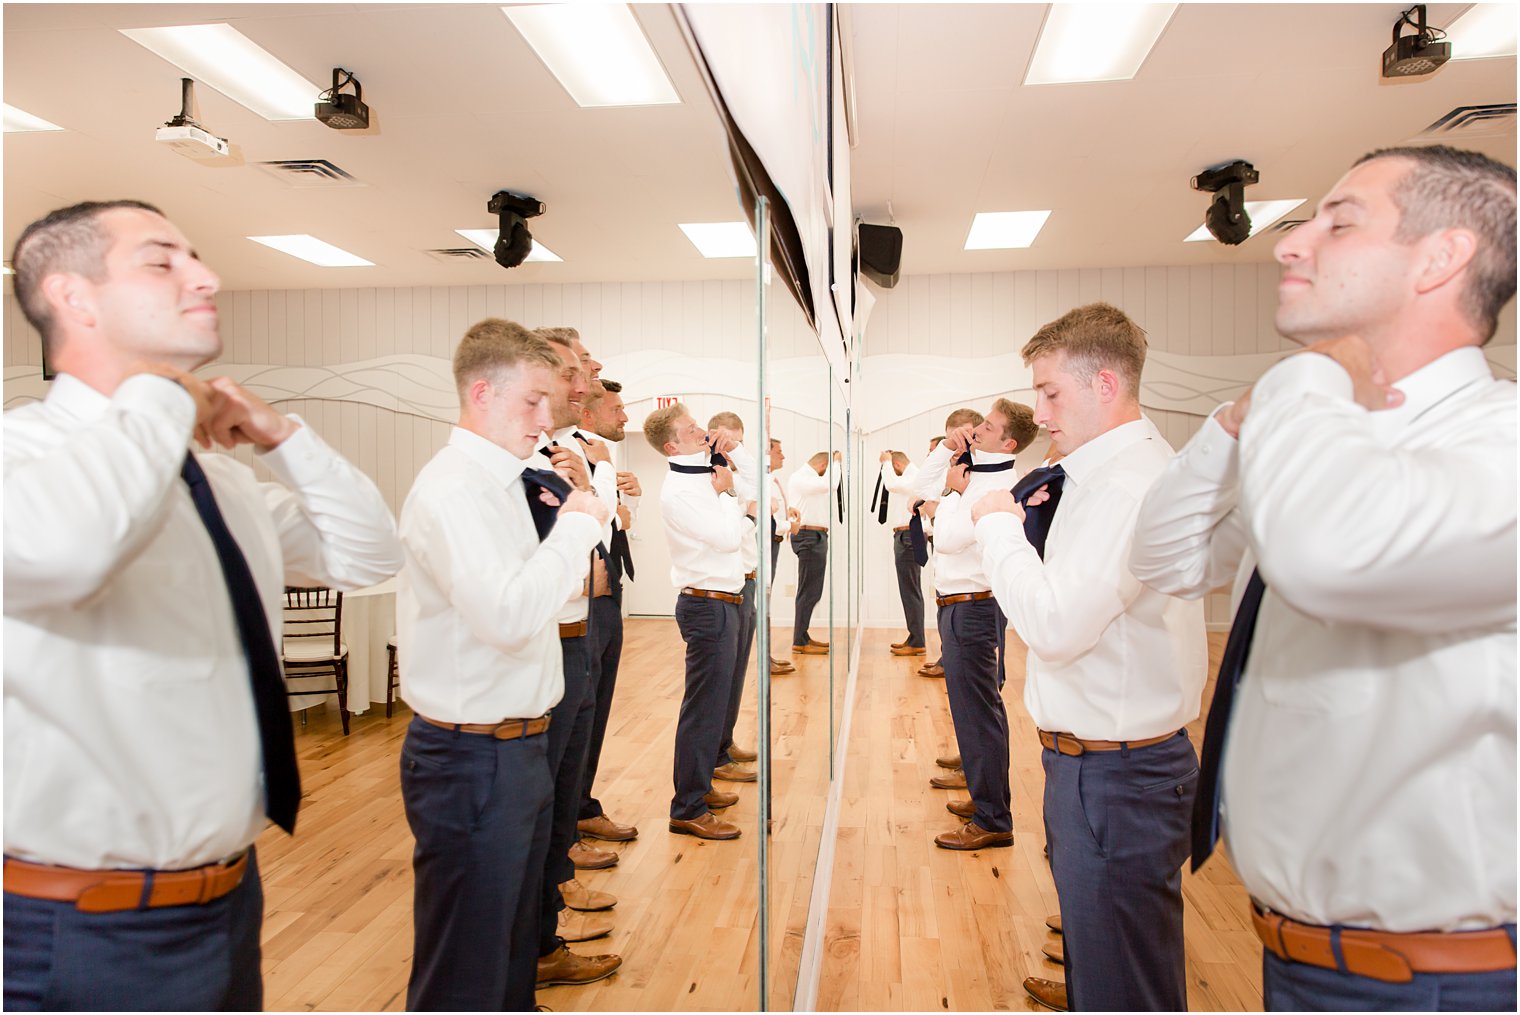 groomsmen prepare for NJ wedding day in mirror